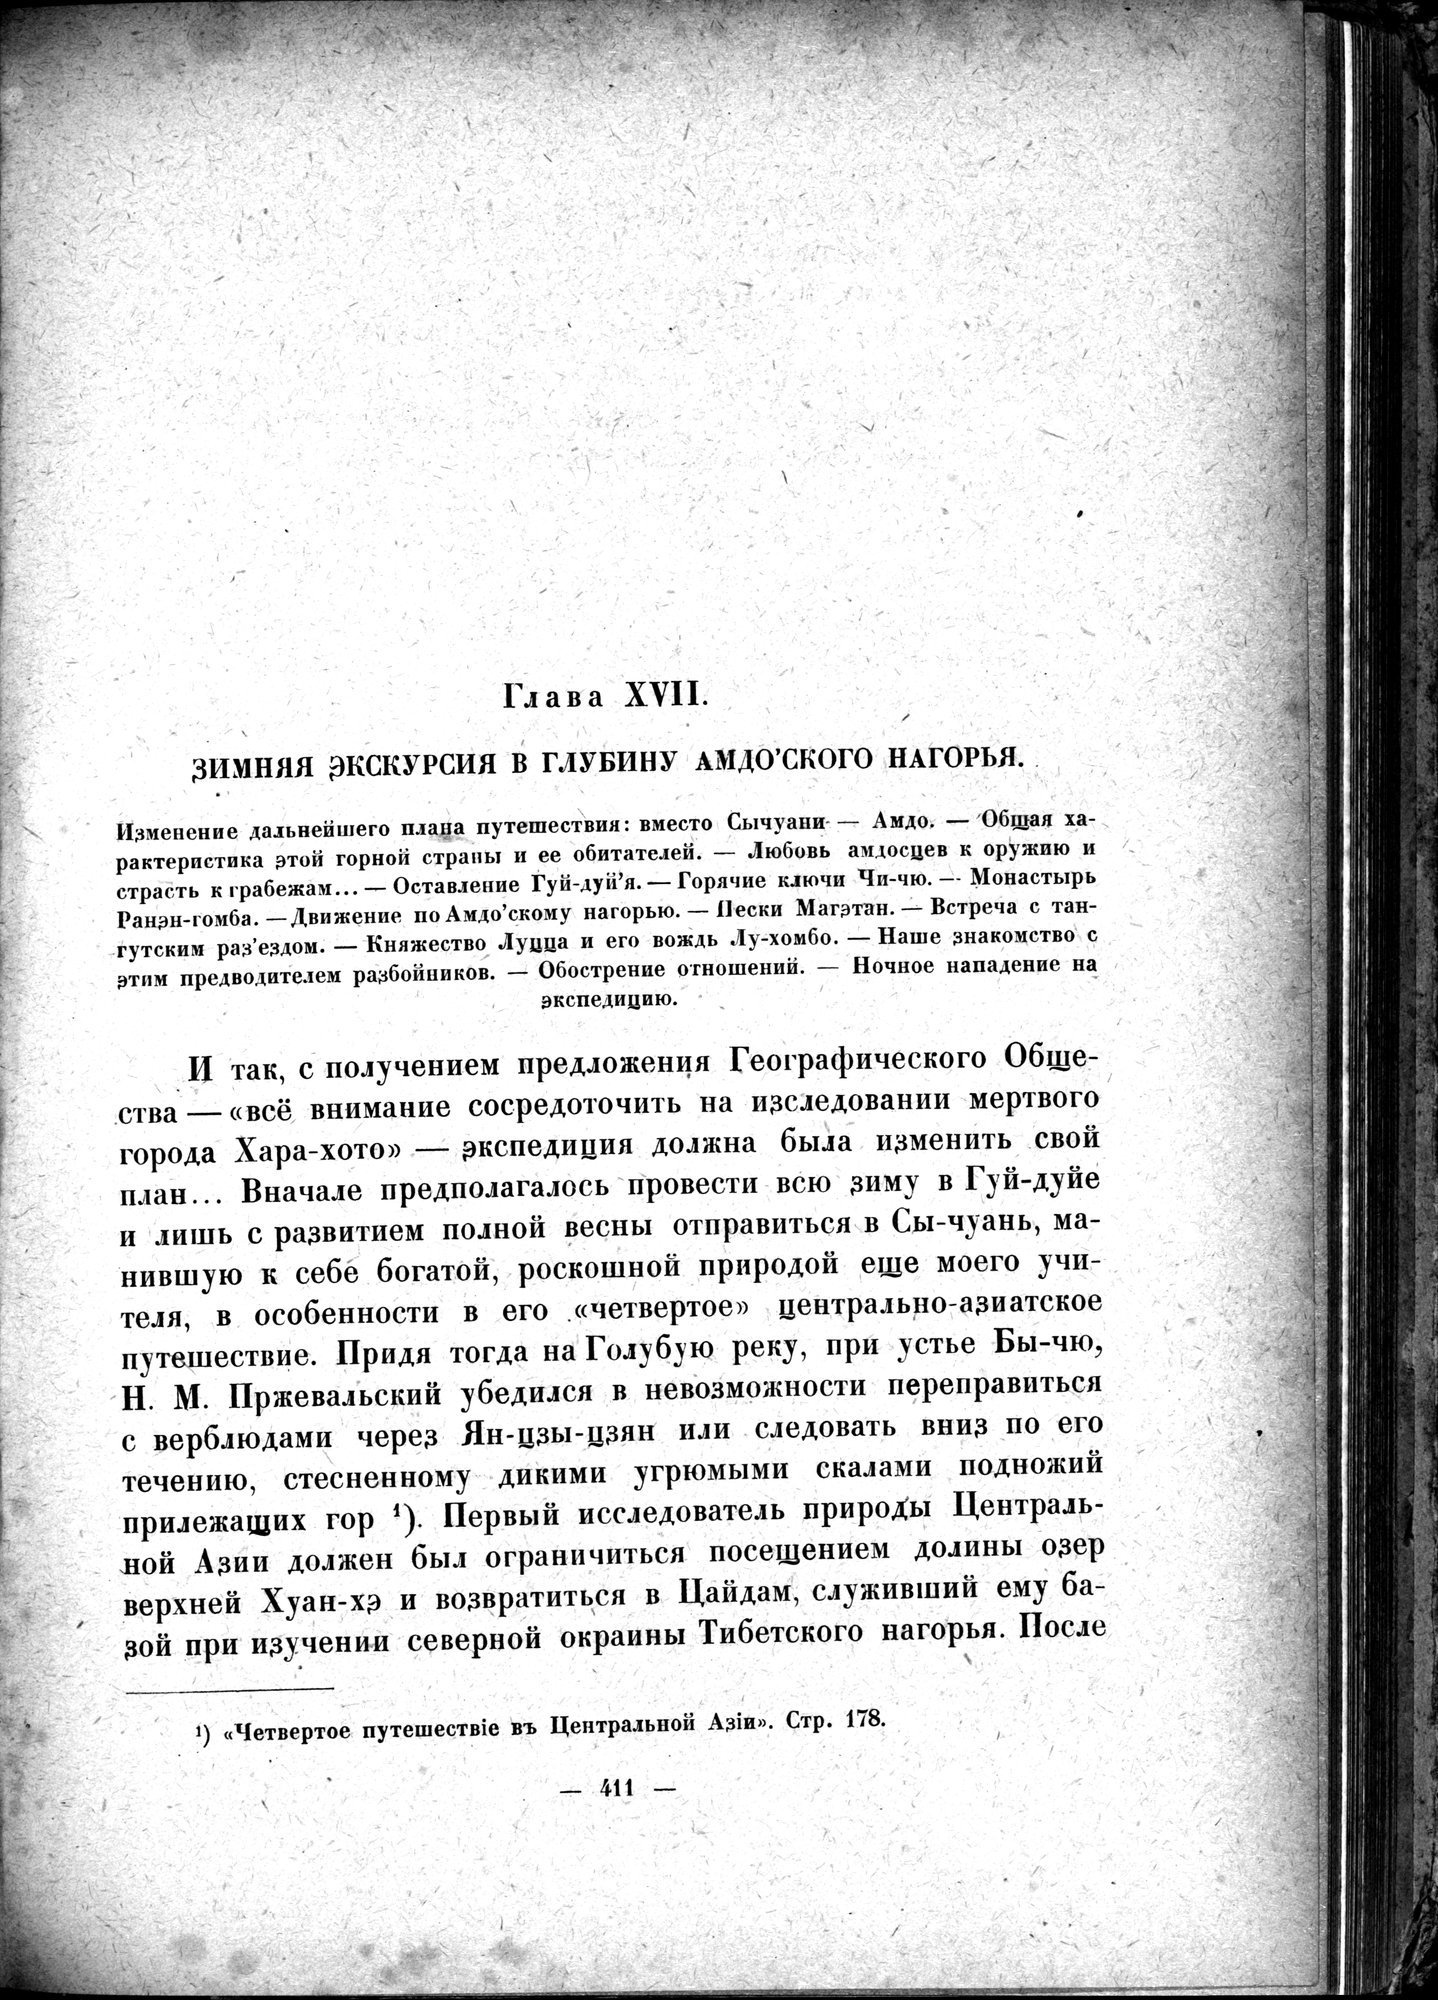 Mongoliya i Amdo i mertby gorod Khara-Khoto : vol.1 / Page 473 (Grayscale High Resolution Image)